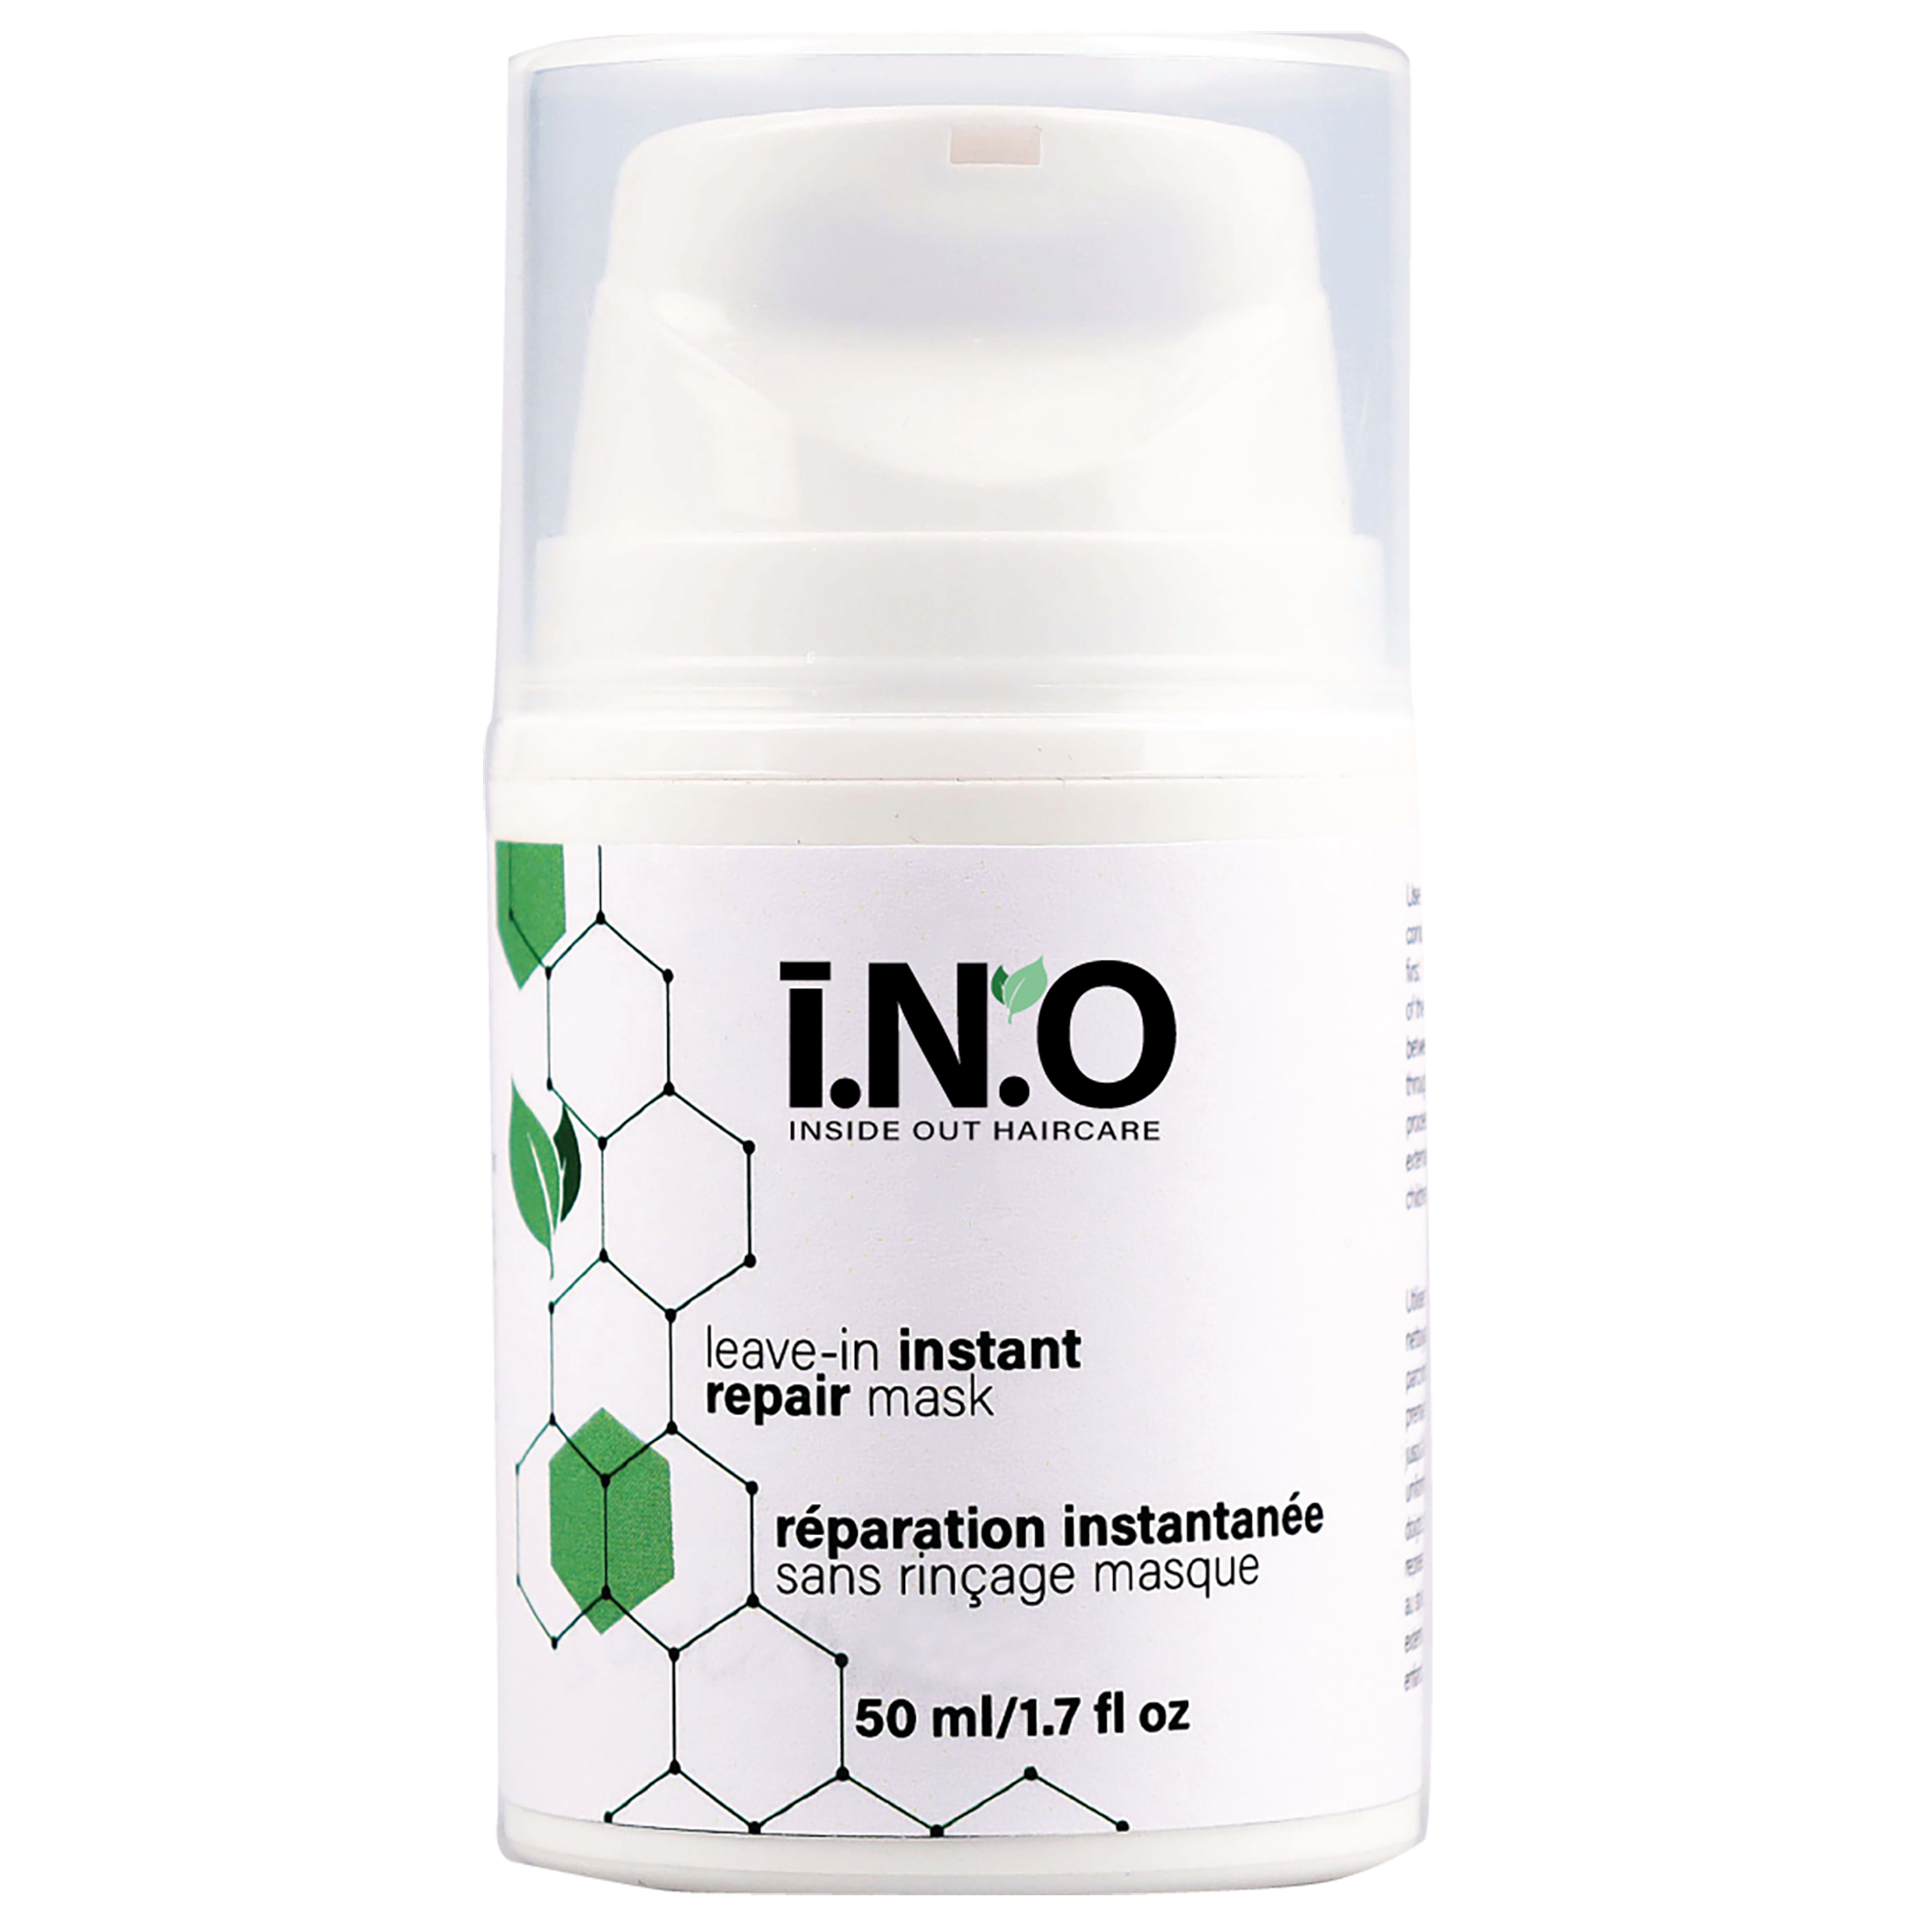 I.N.O Instant Hair Repair Mask 50 ml